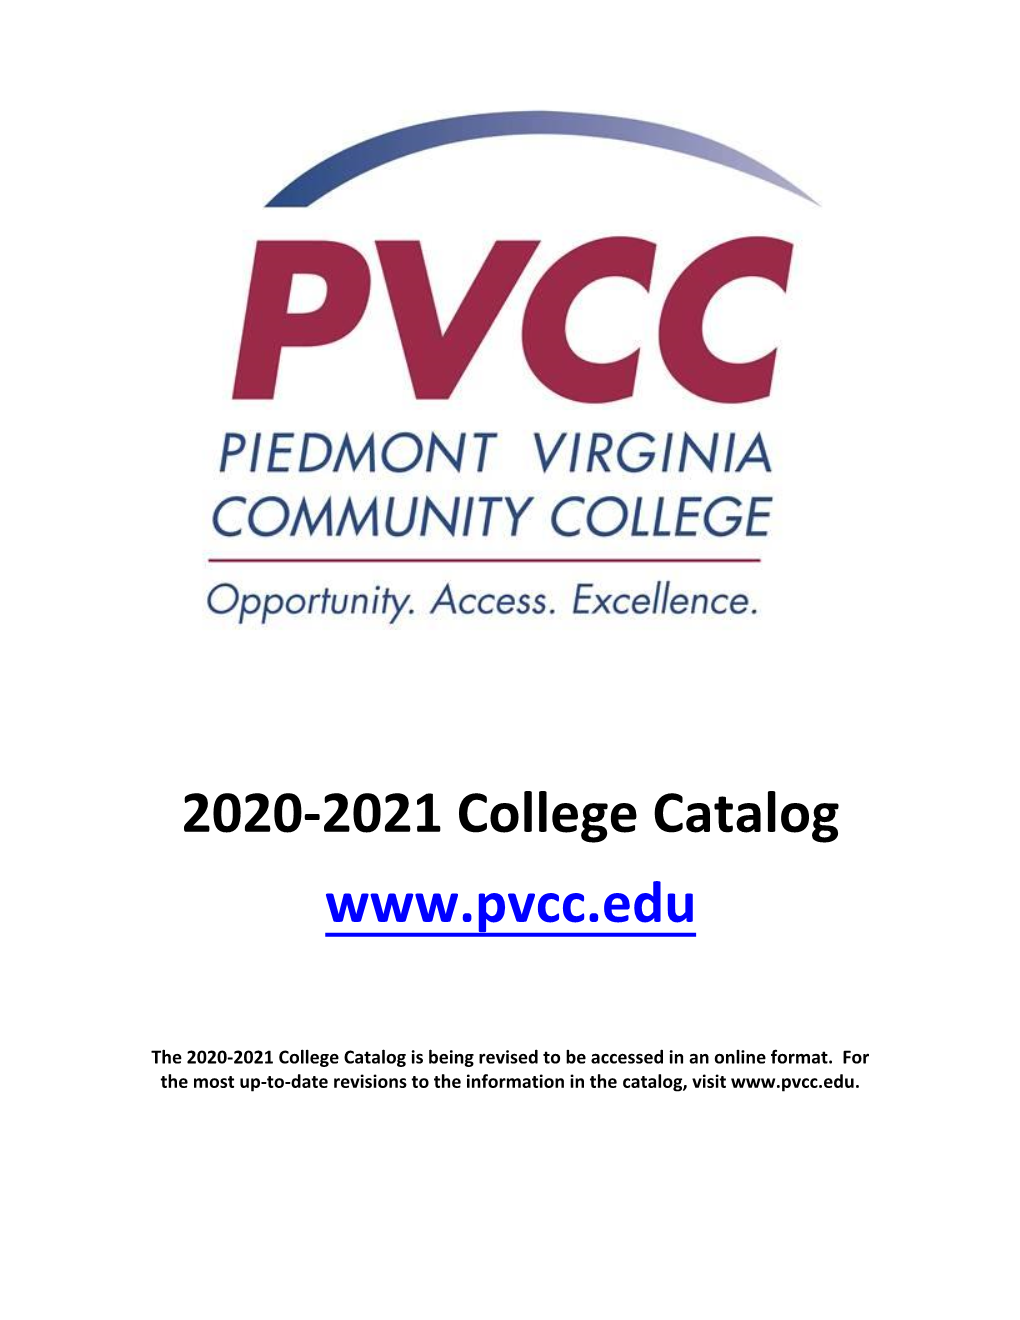 PVCC College Catalog 2020-2021